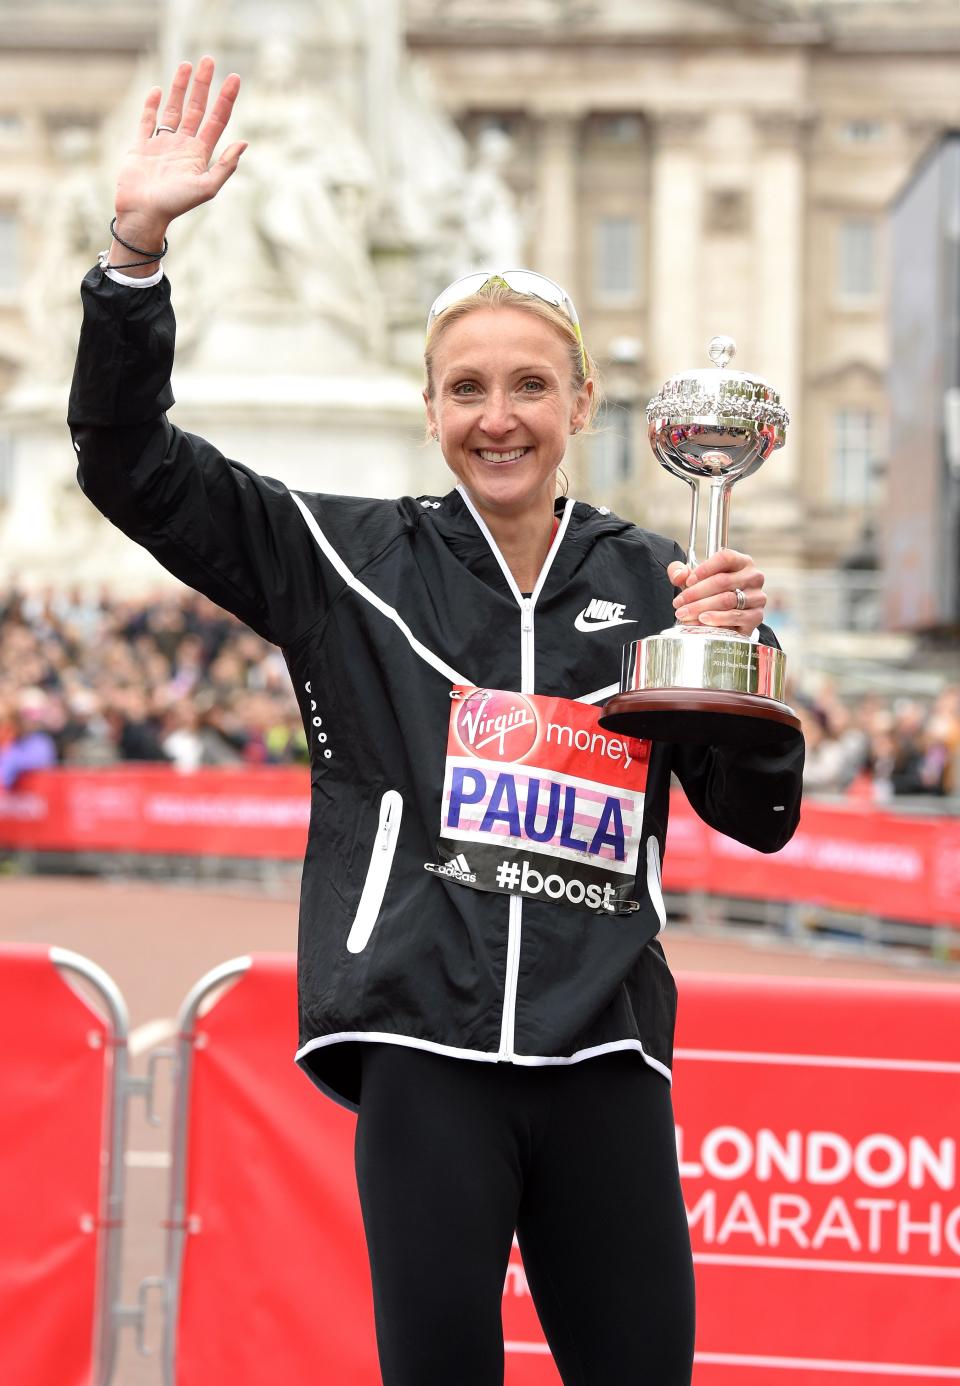 Paula Radcliffe receiving the inaugural John Disley London Marathon Lifetime Achievement Award during the London Marathon in April 2015 in London. (Getty Images)